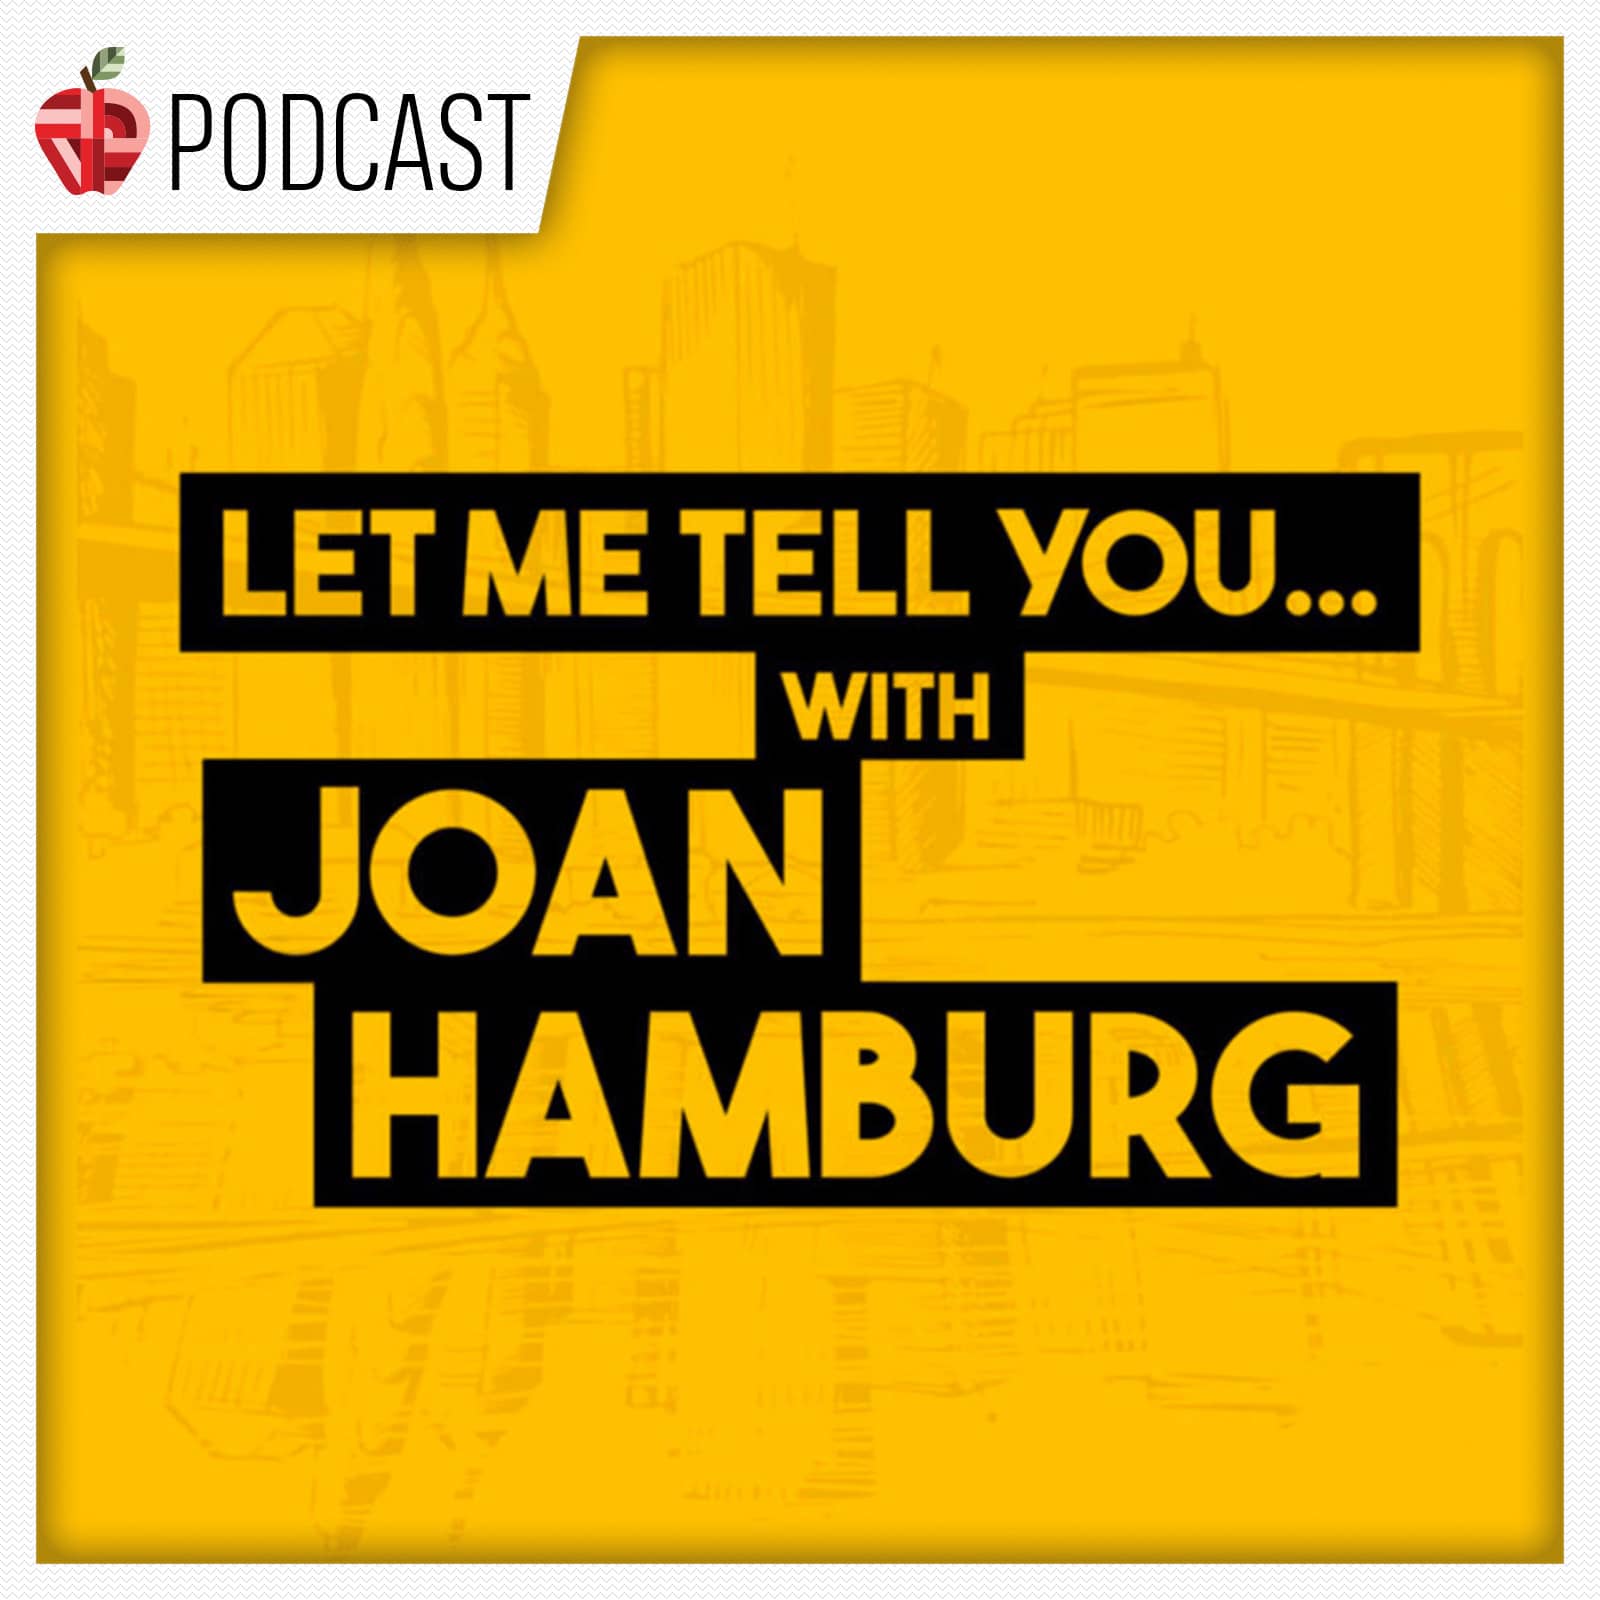 joan-hamburg-let-me-tell-you-podcast-podcast-logo488489